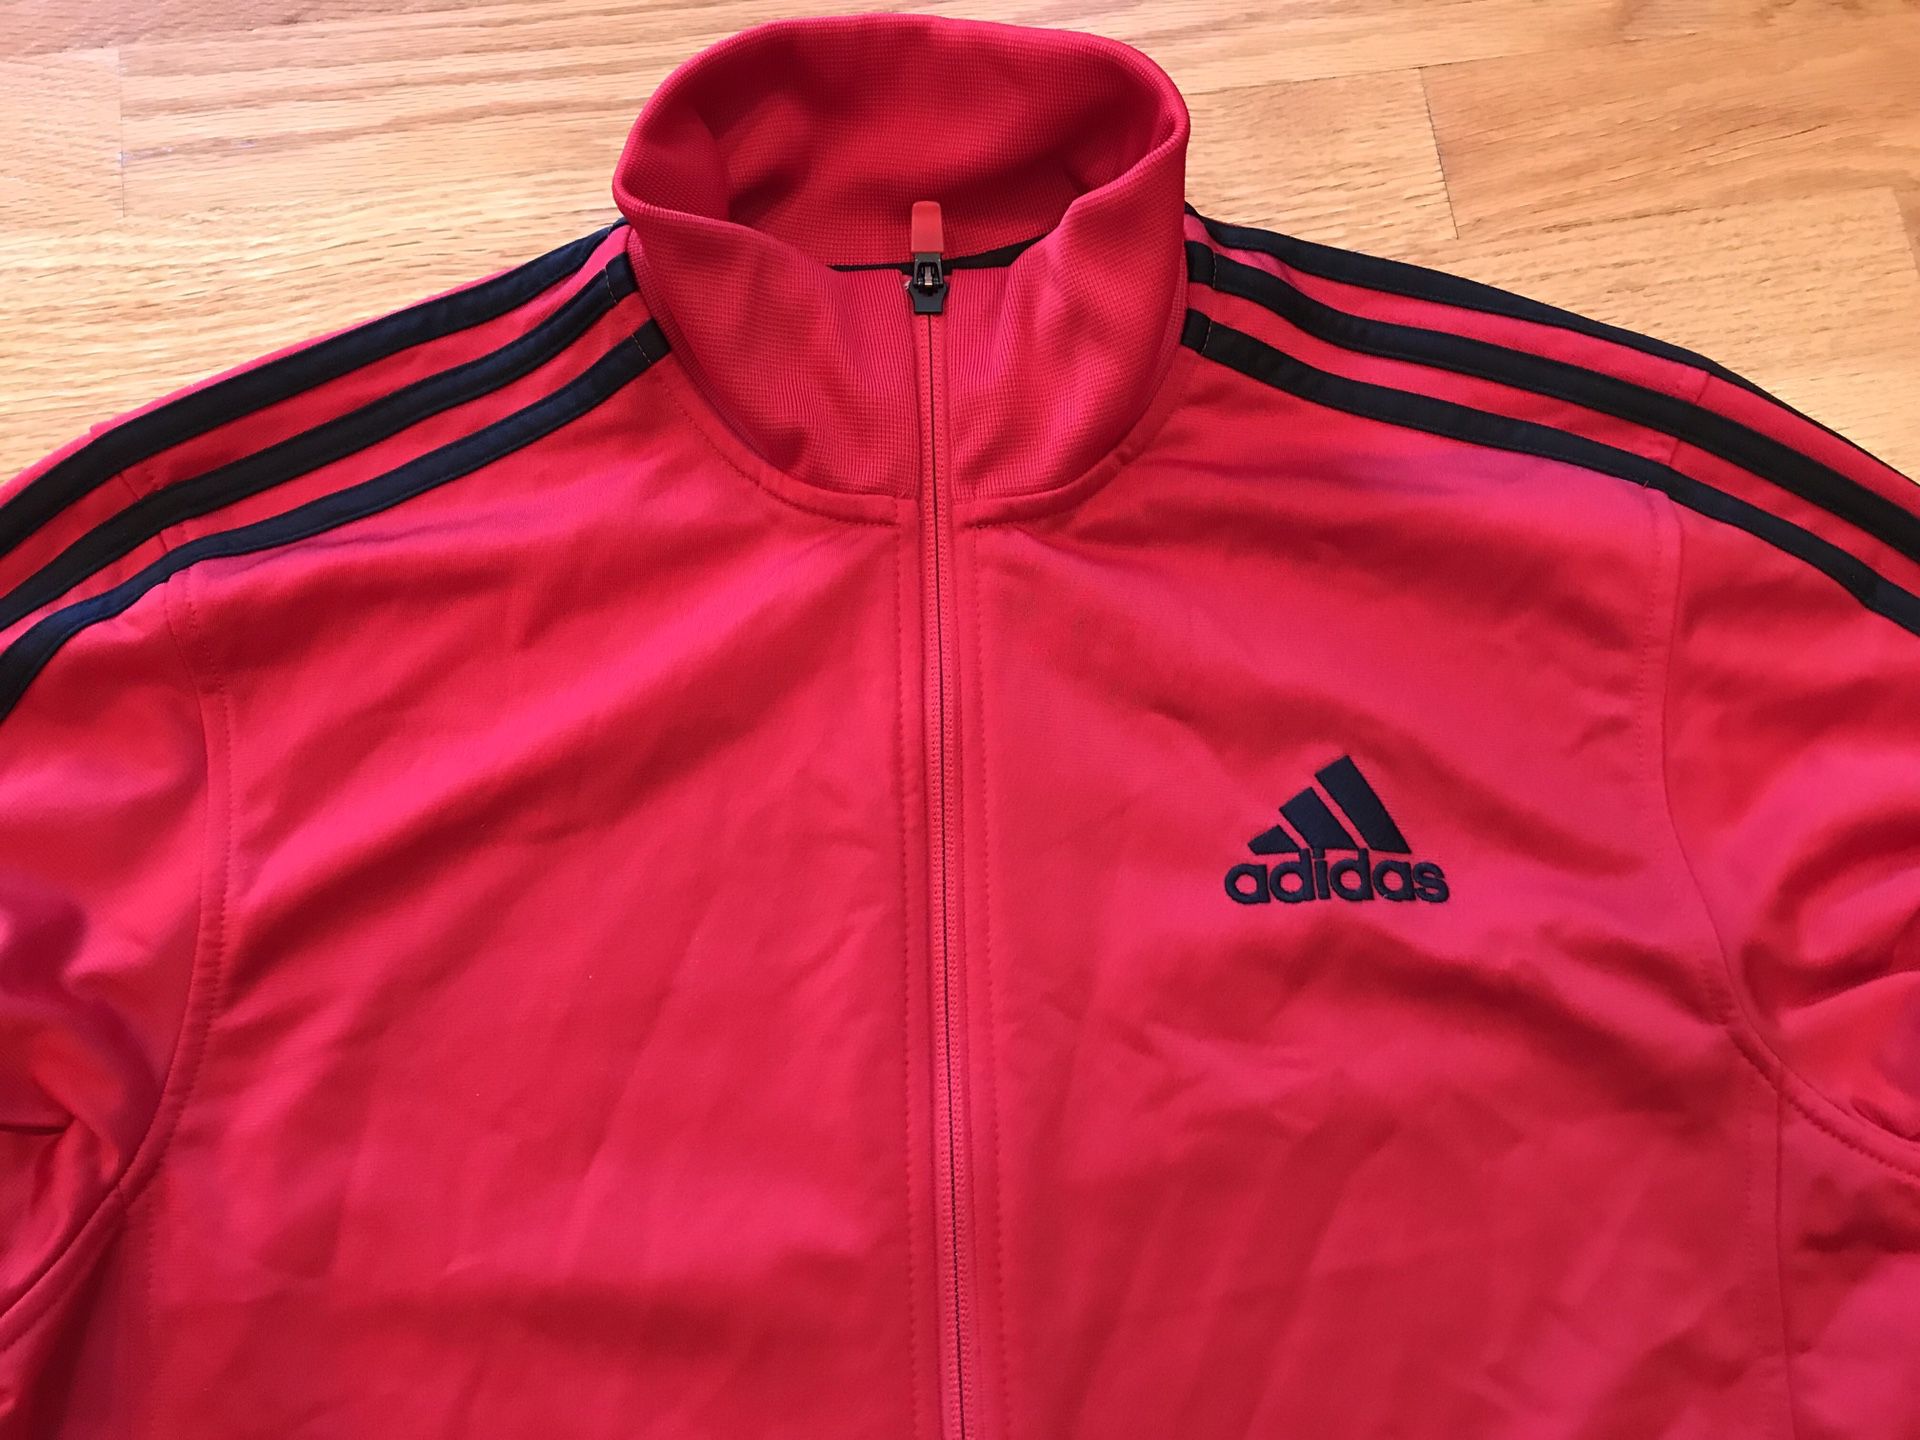 Adidas Red & Black Jacket